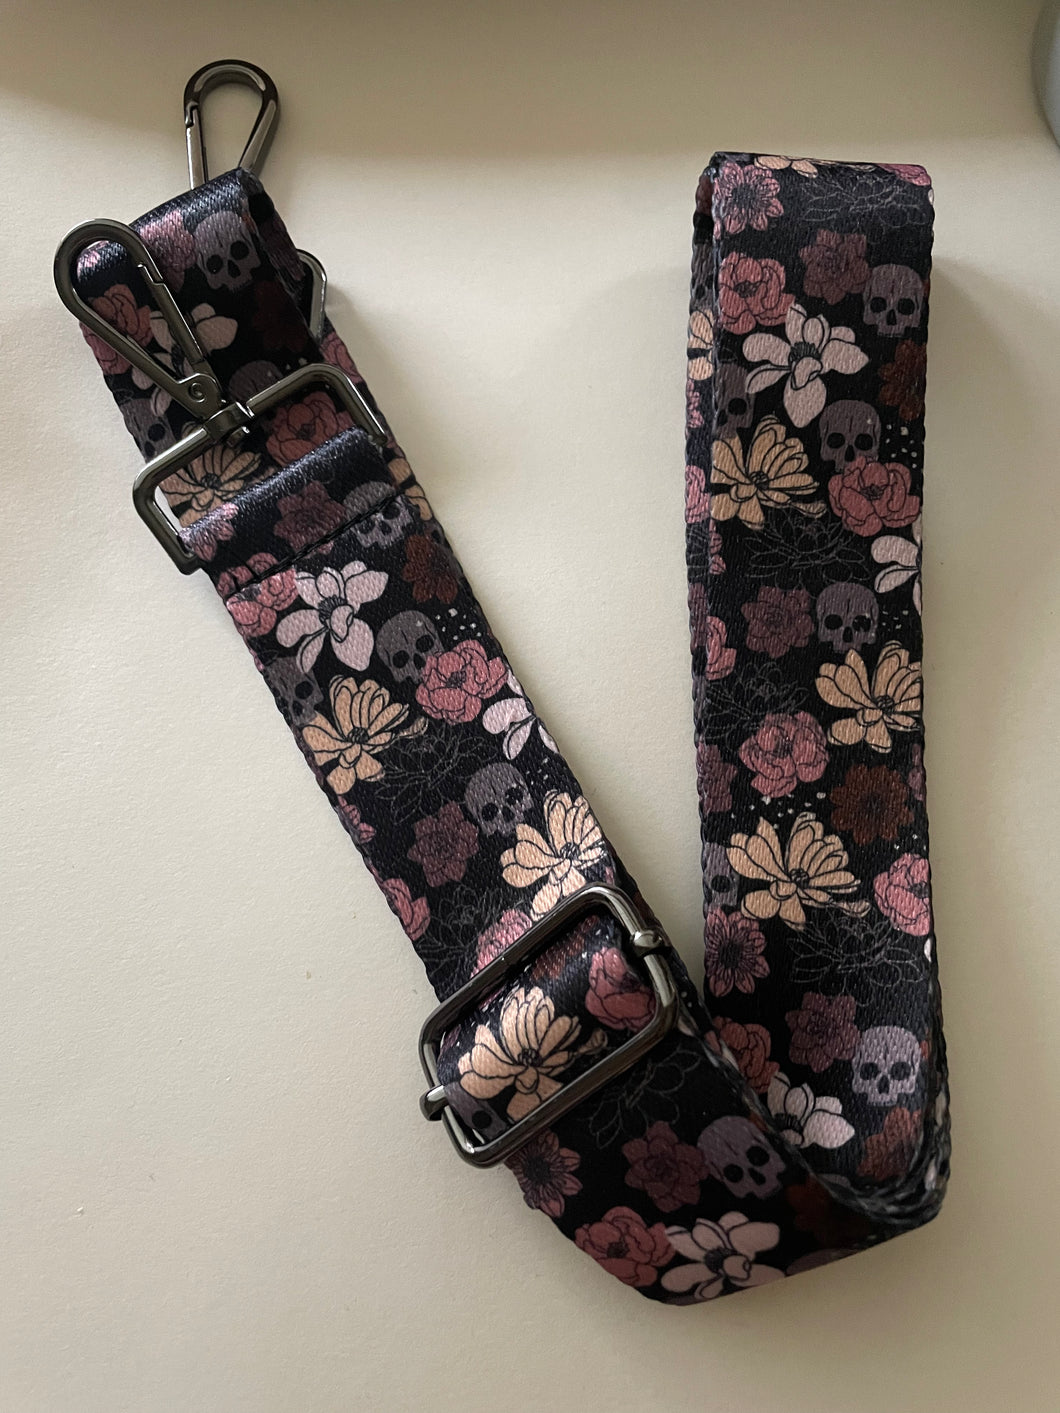 NEW black floral skull strap